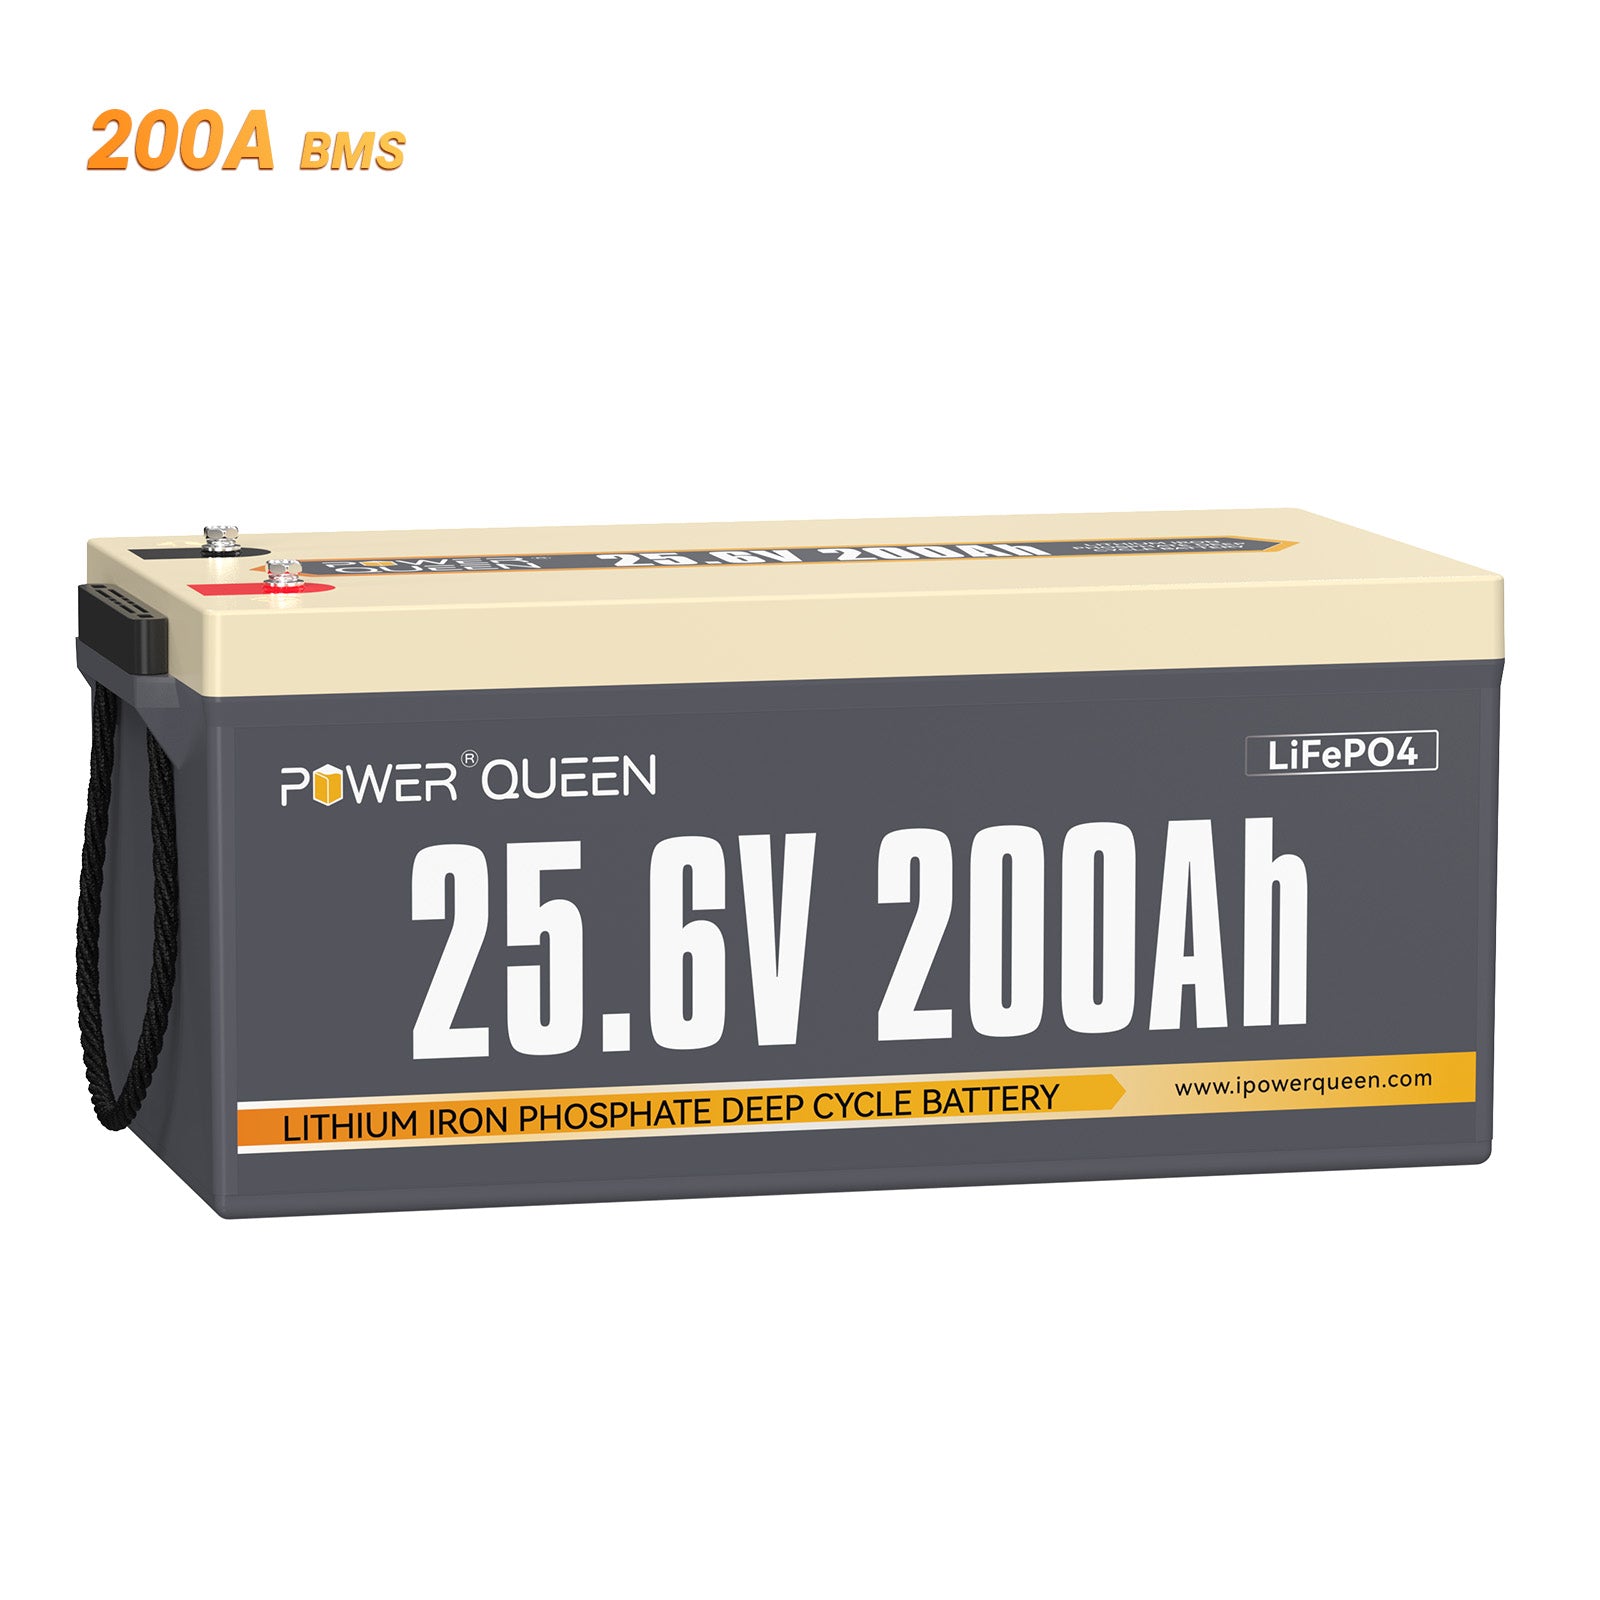 【0% Mwst.】Power Queen 24V 200Ah LiFePO4 Batterie, Eingebautes 200A BMS